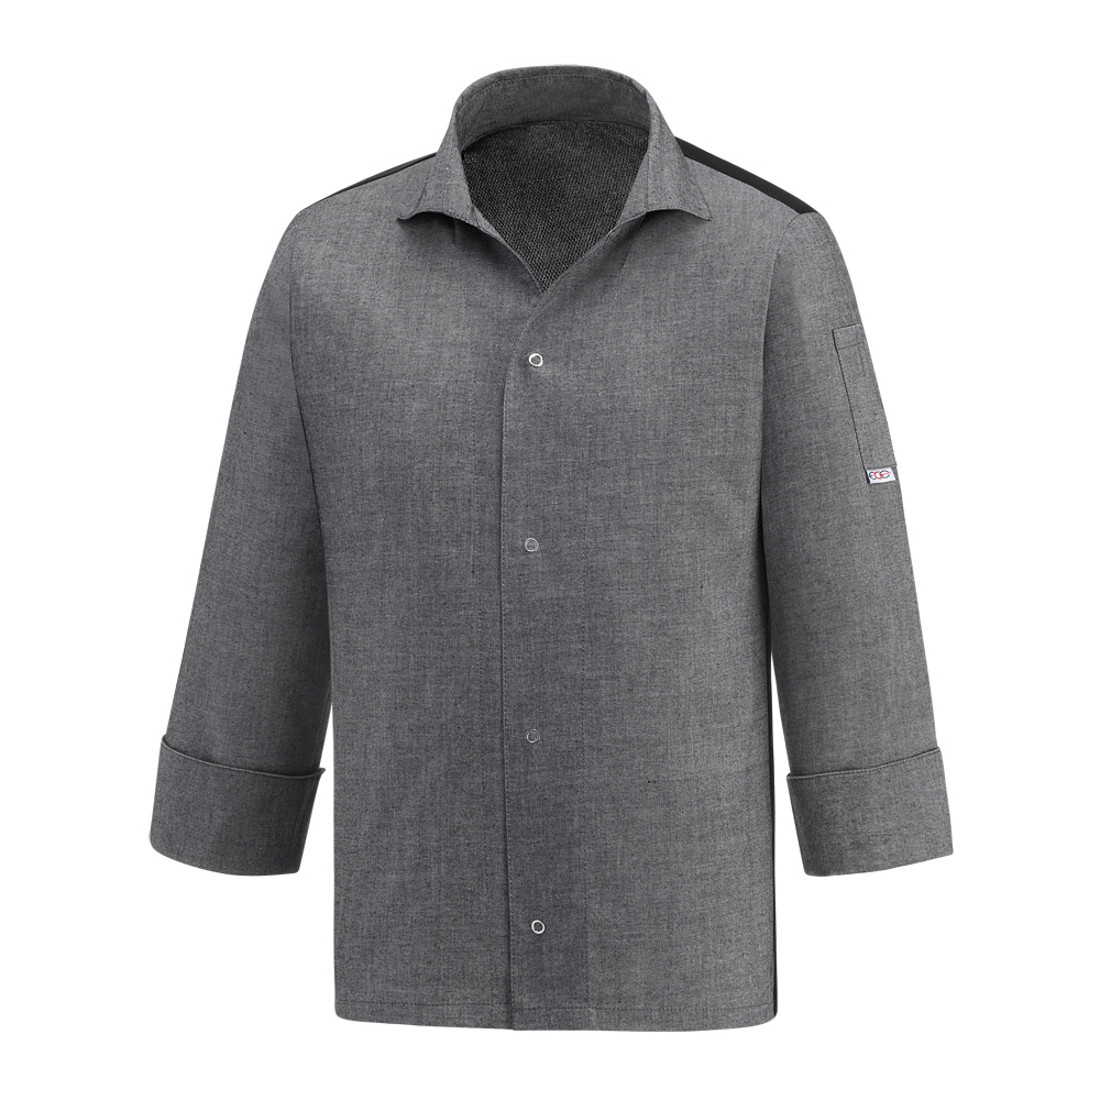 Vip Chef's Jacket, 65% polyester/35% cotton - Safetywear